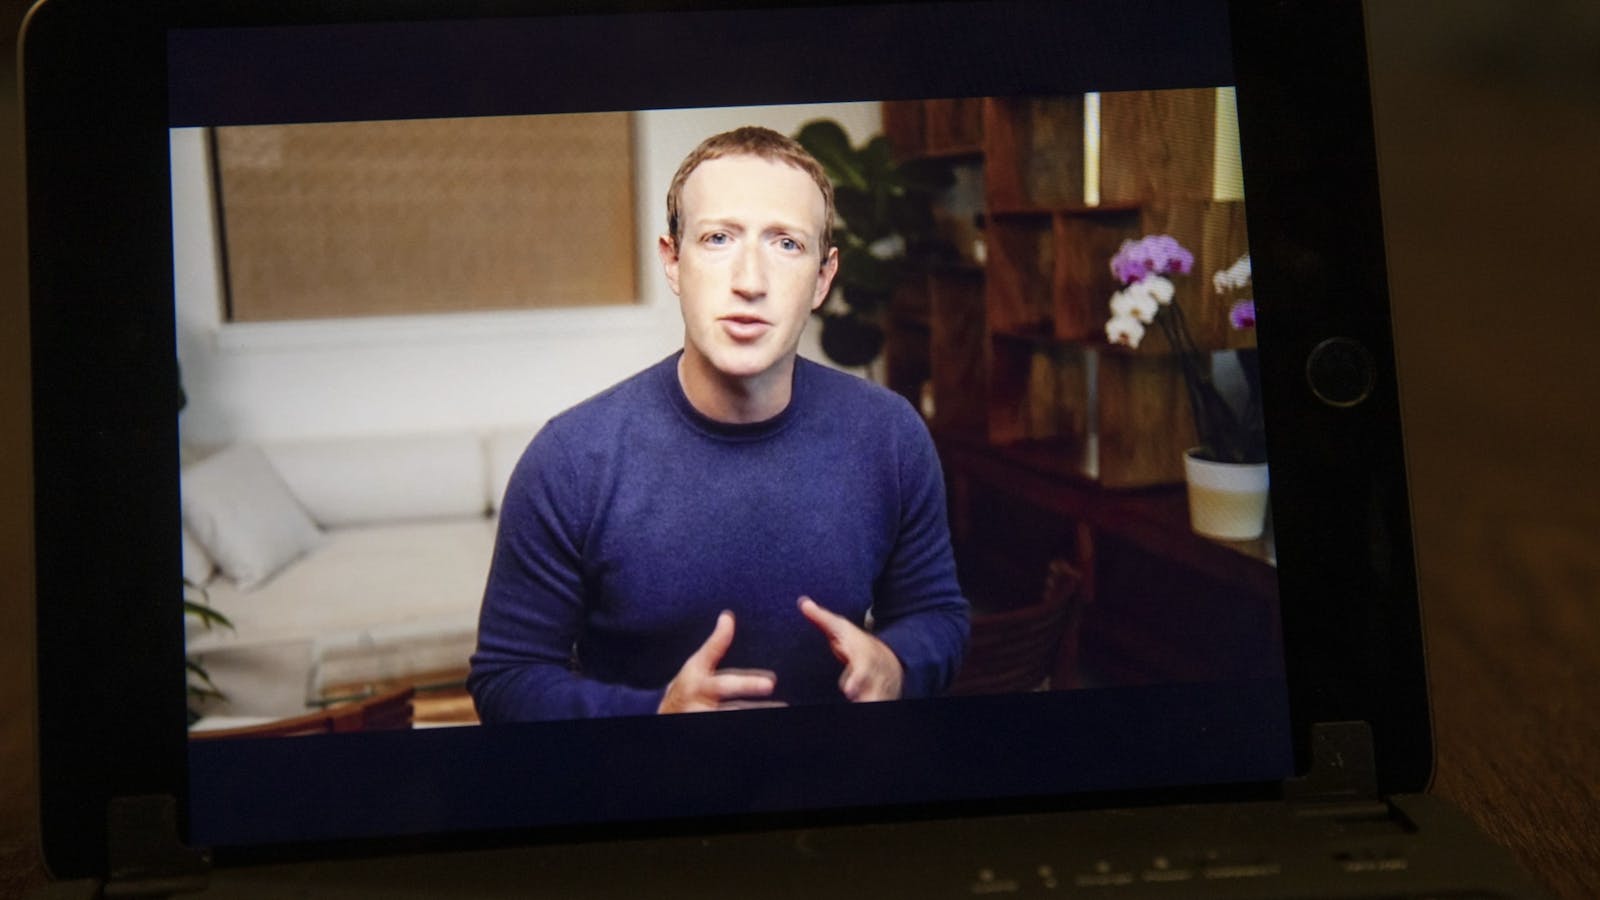 Facebook CEO Mark Zuckerberg. Photo by Bloomberg.